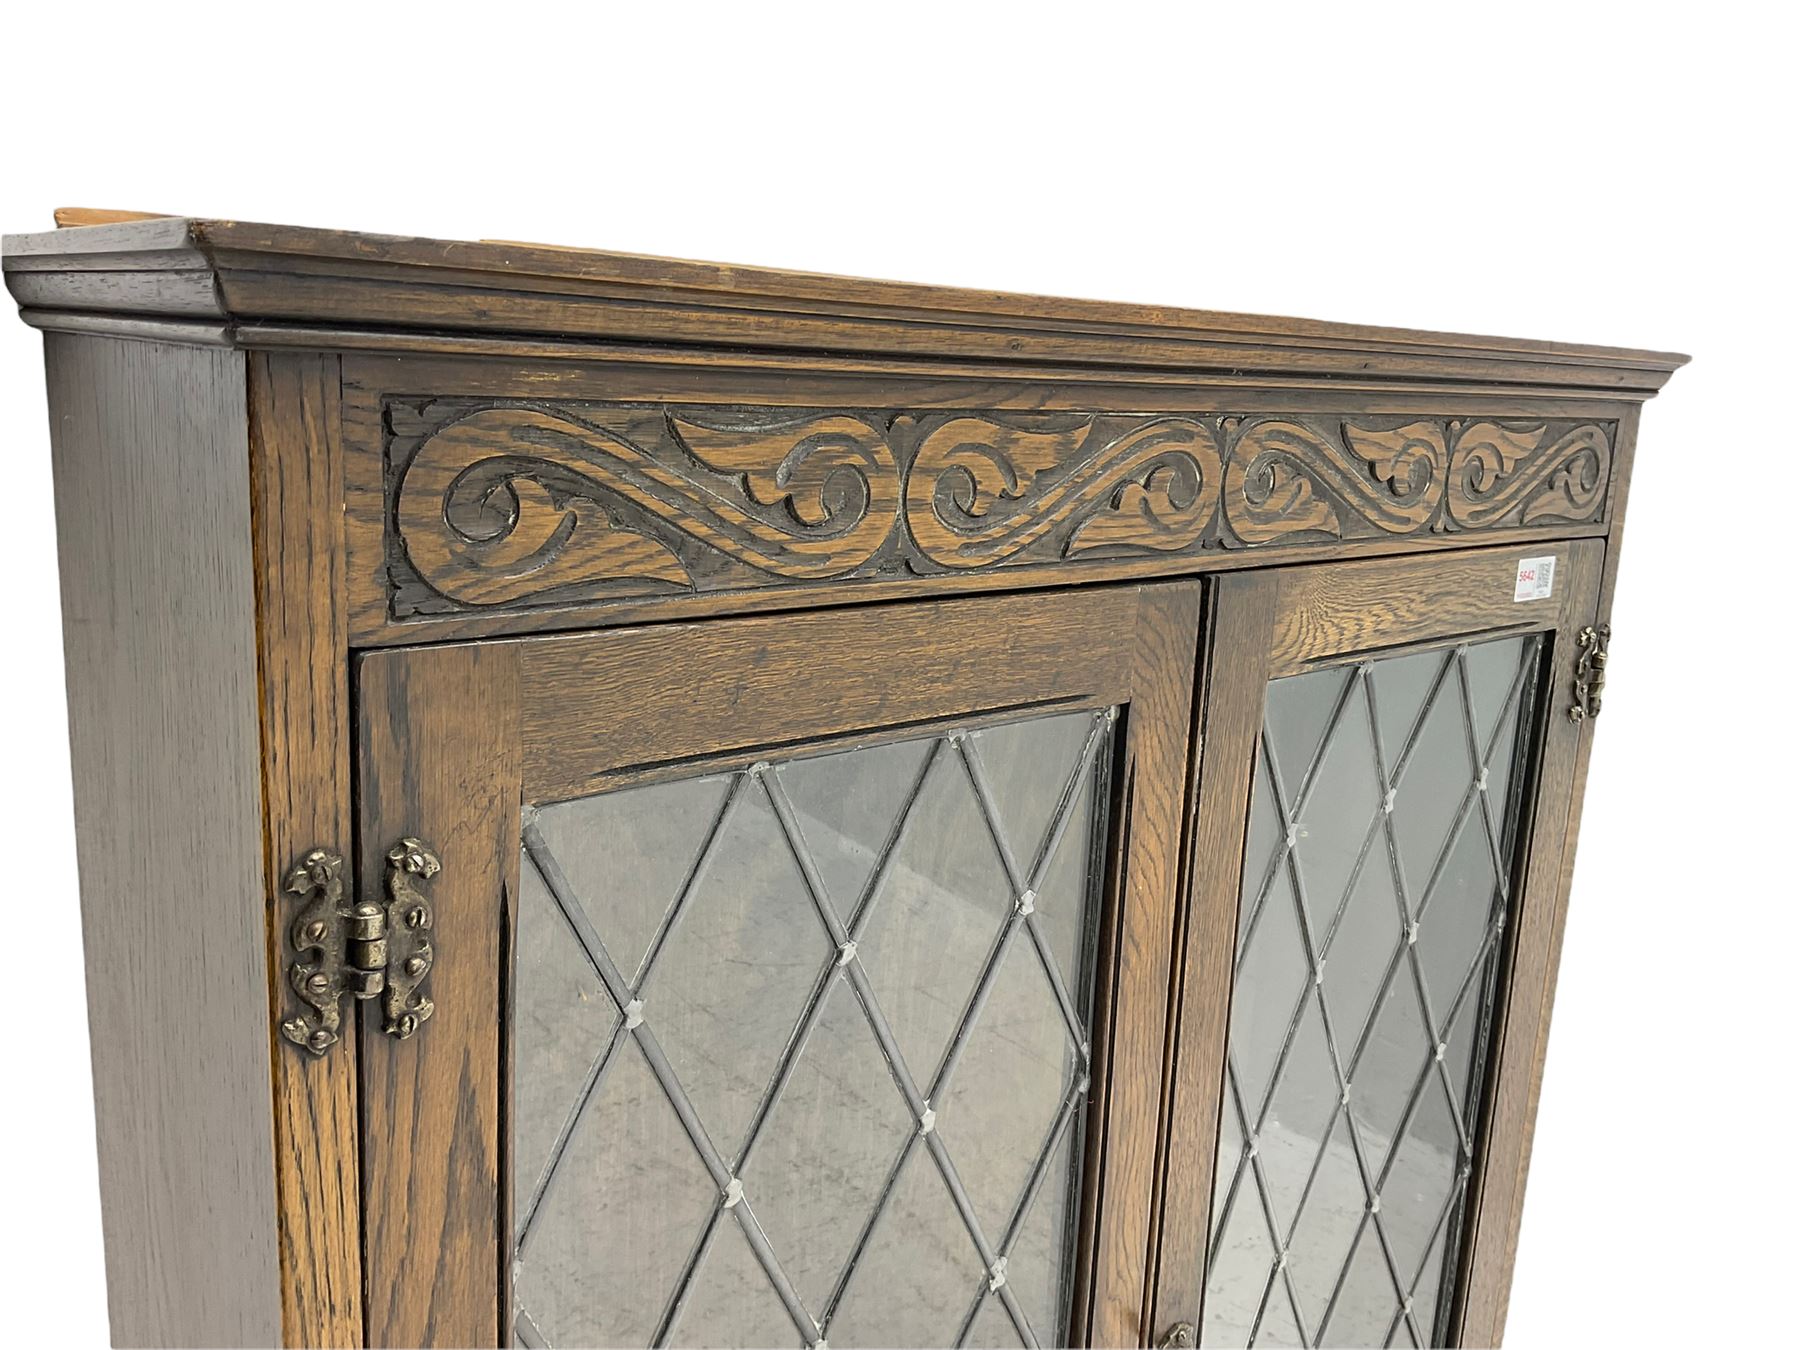 Oak bookcase with lead glazed doors - Image 5 of 5